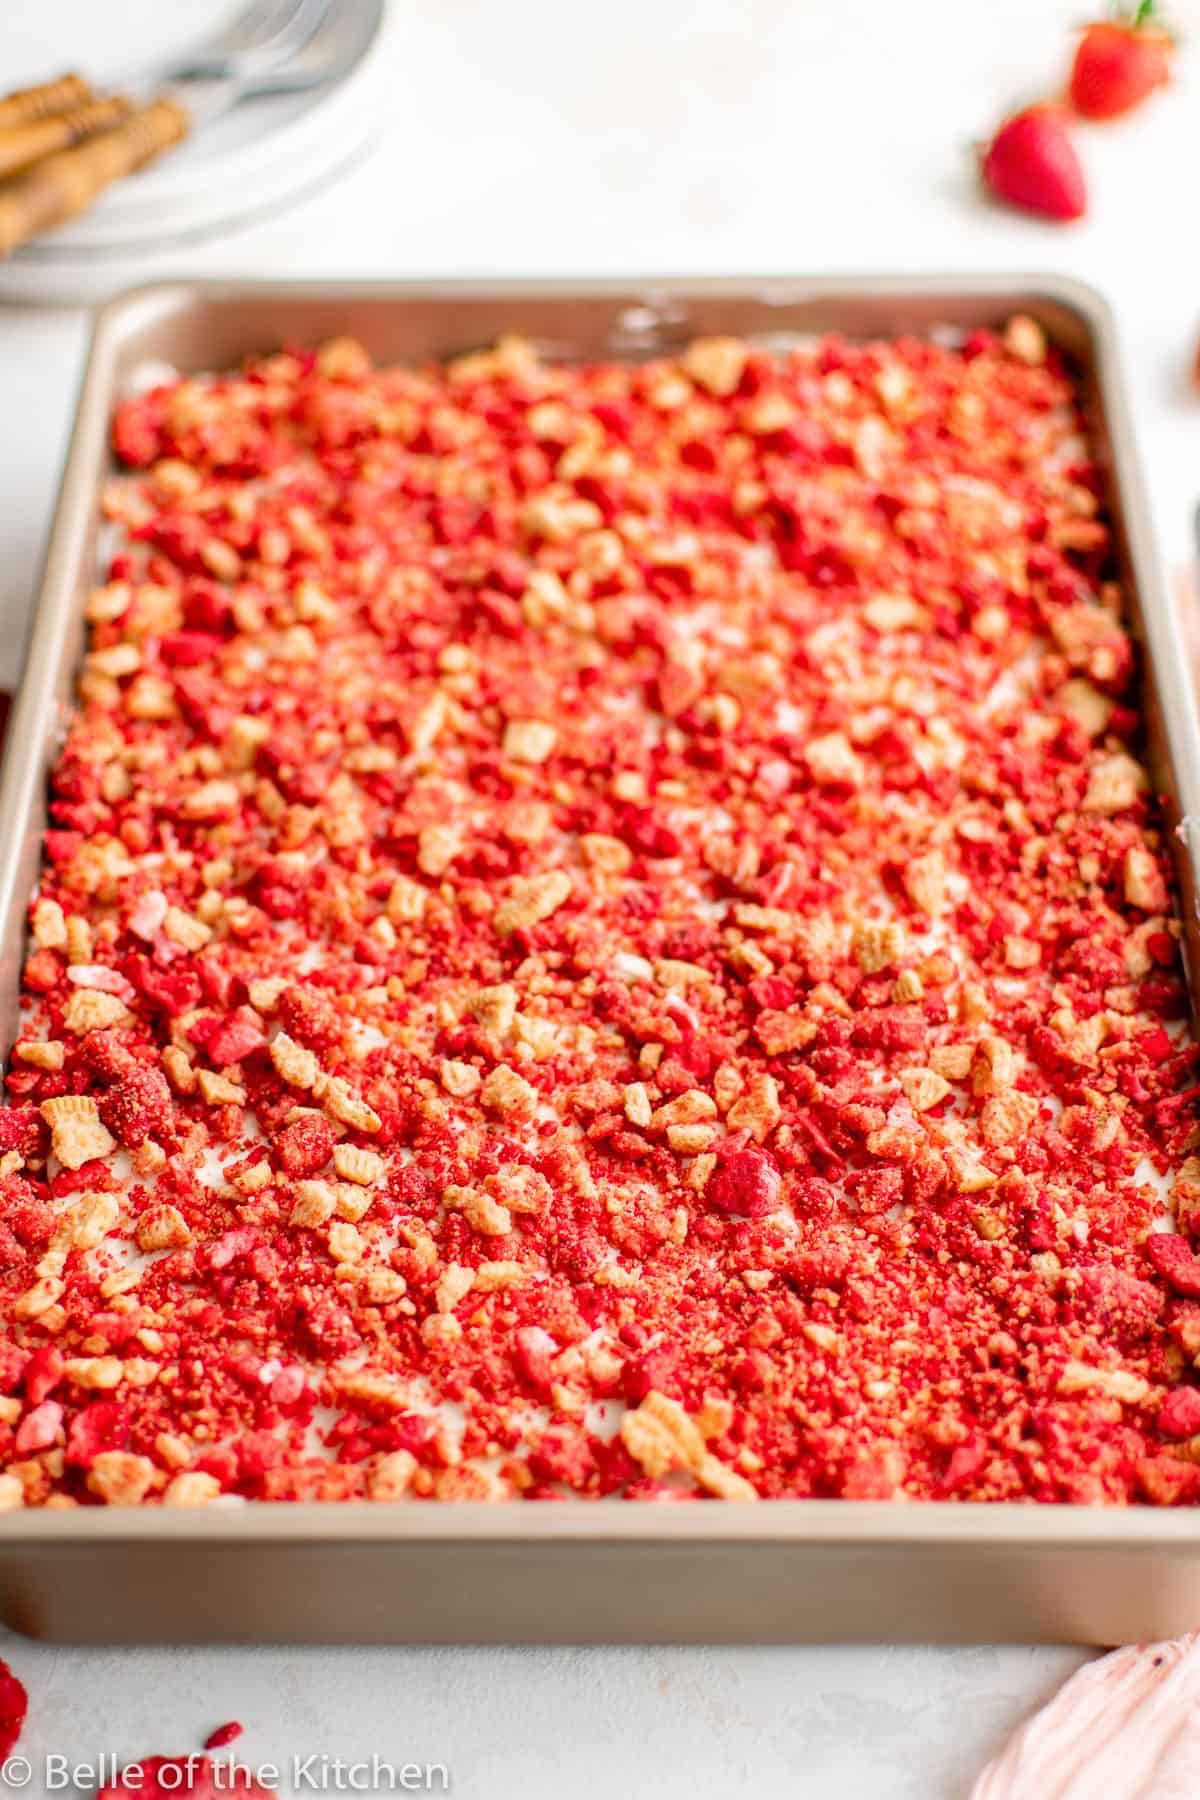 strawberry crunch cake in a rectangular baking pan.